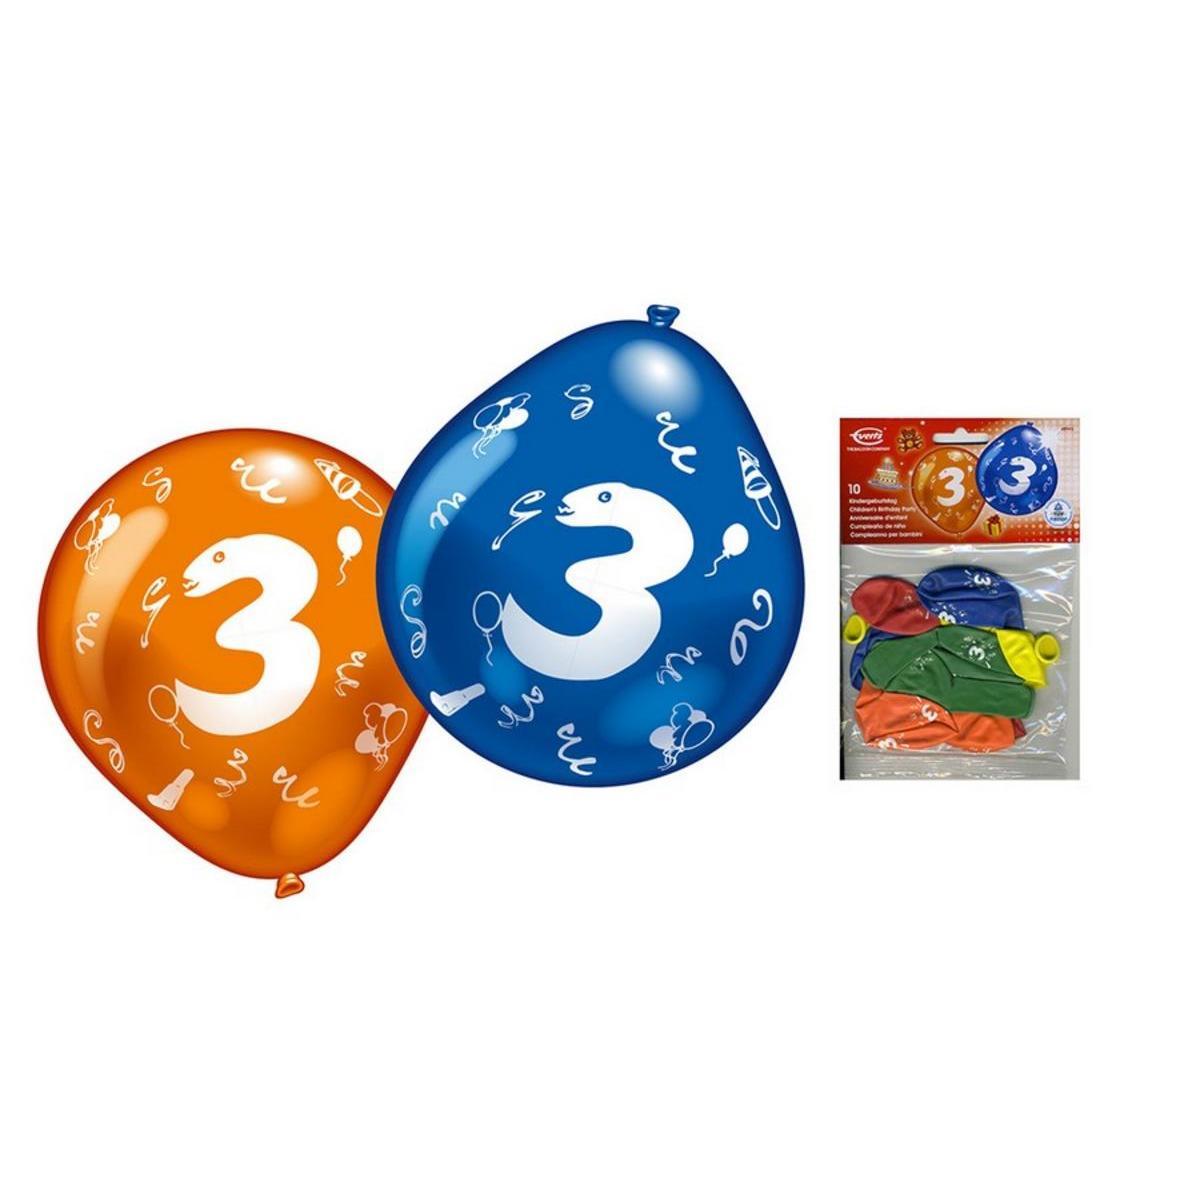 10 ballons chiffre 3 - ø 25 cm